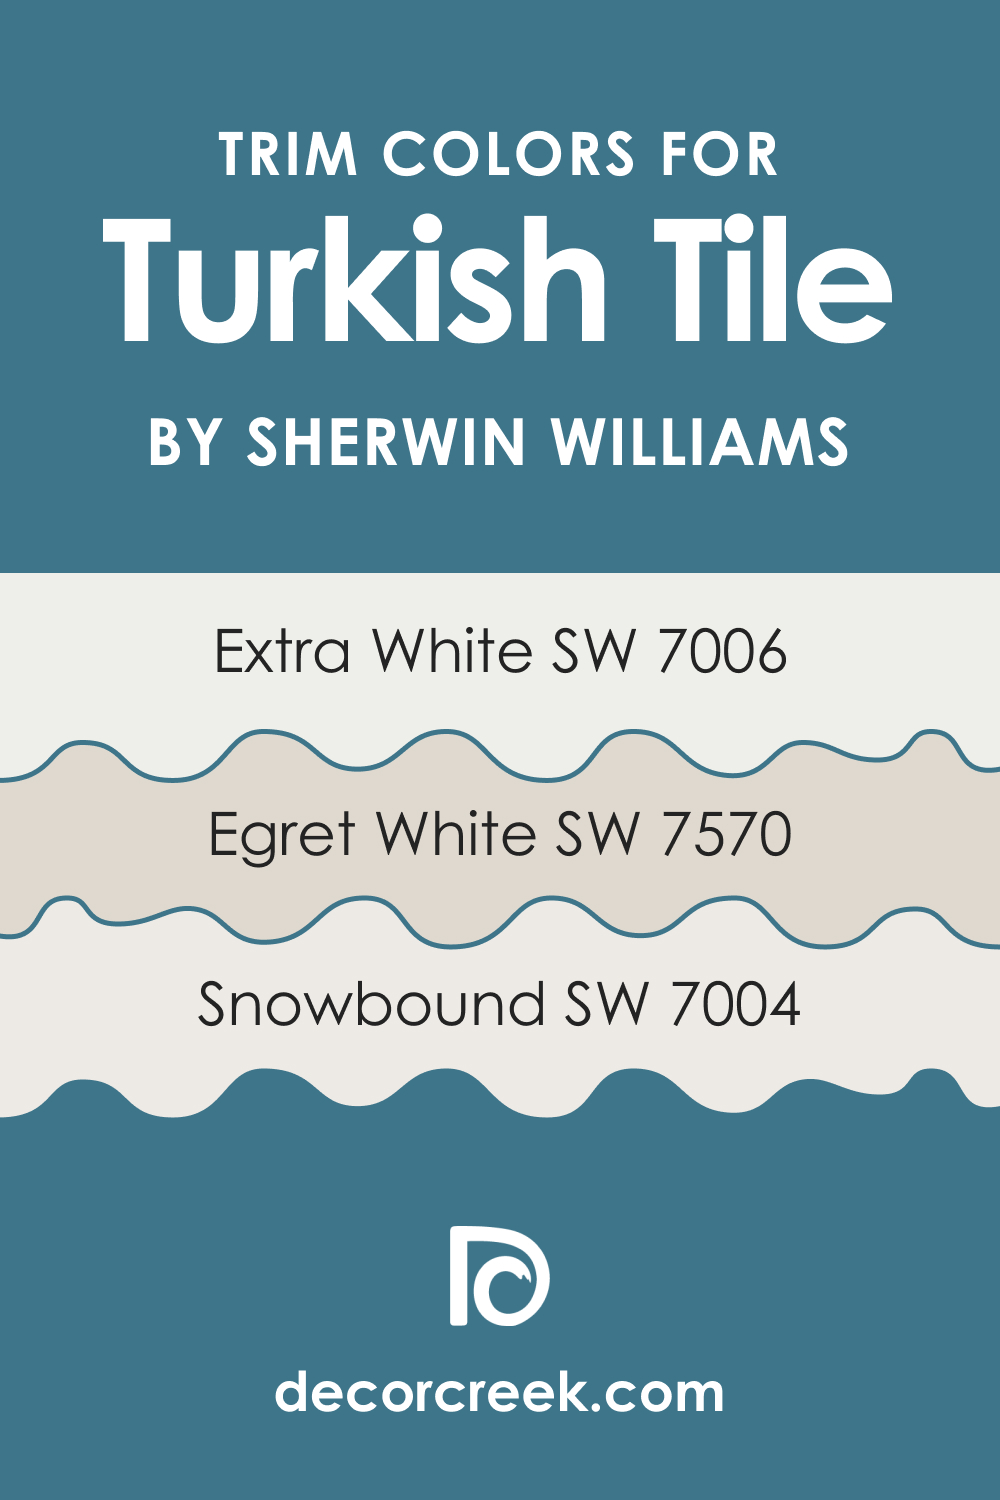 Trim Colors of SW 7610 Turkish Tile